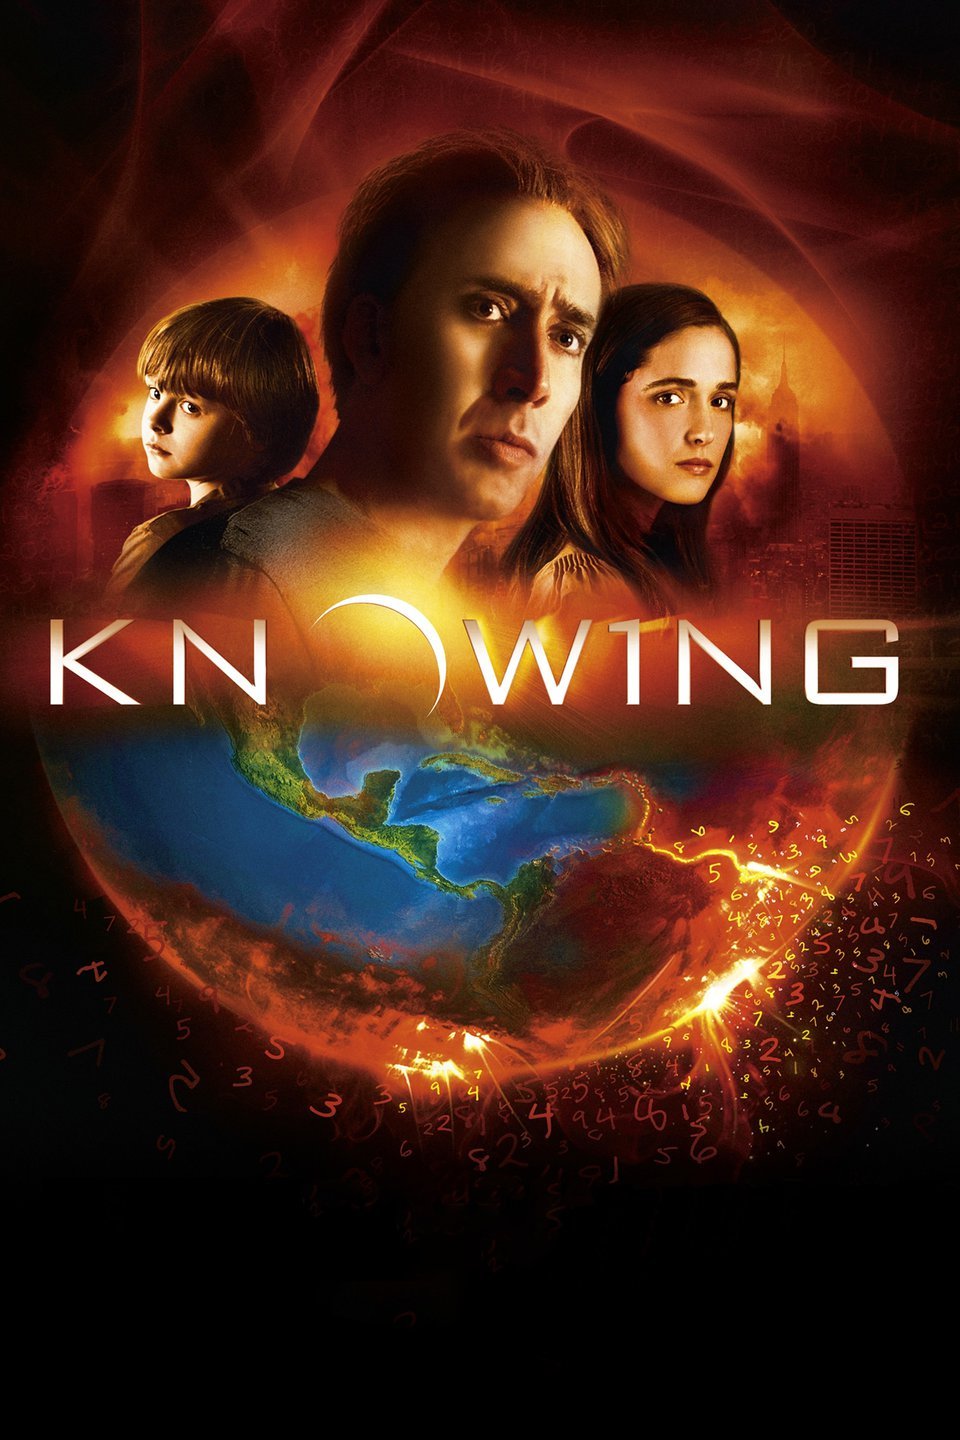 [MINI Super-HQ] Knowing (2009) รหัสวินาศโลก [1080p] [พากย์ไทย 5.1 + เสียงอังกฤษ DTS] [บรรยายไทย + อังกฤษ] [เสียงไทย + ซับไทย] [OPENLOAD]